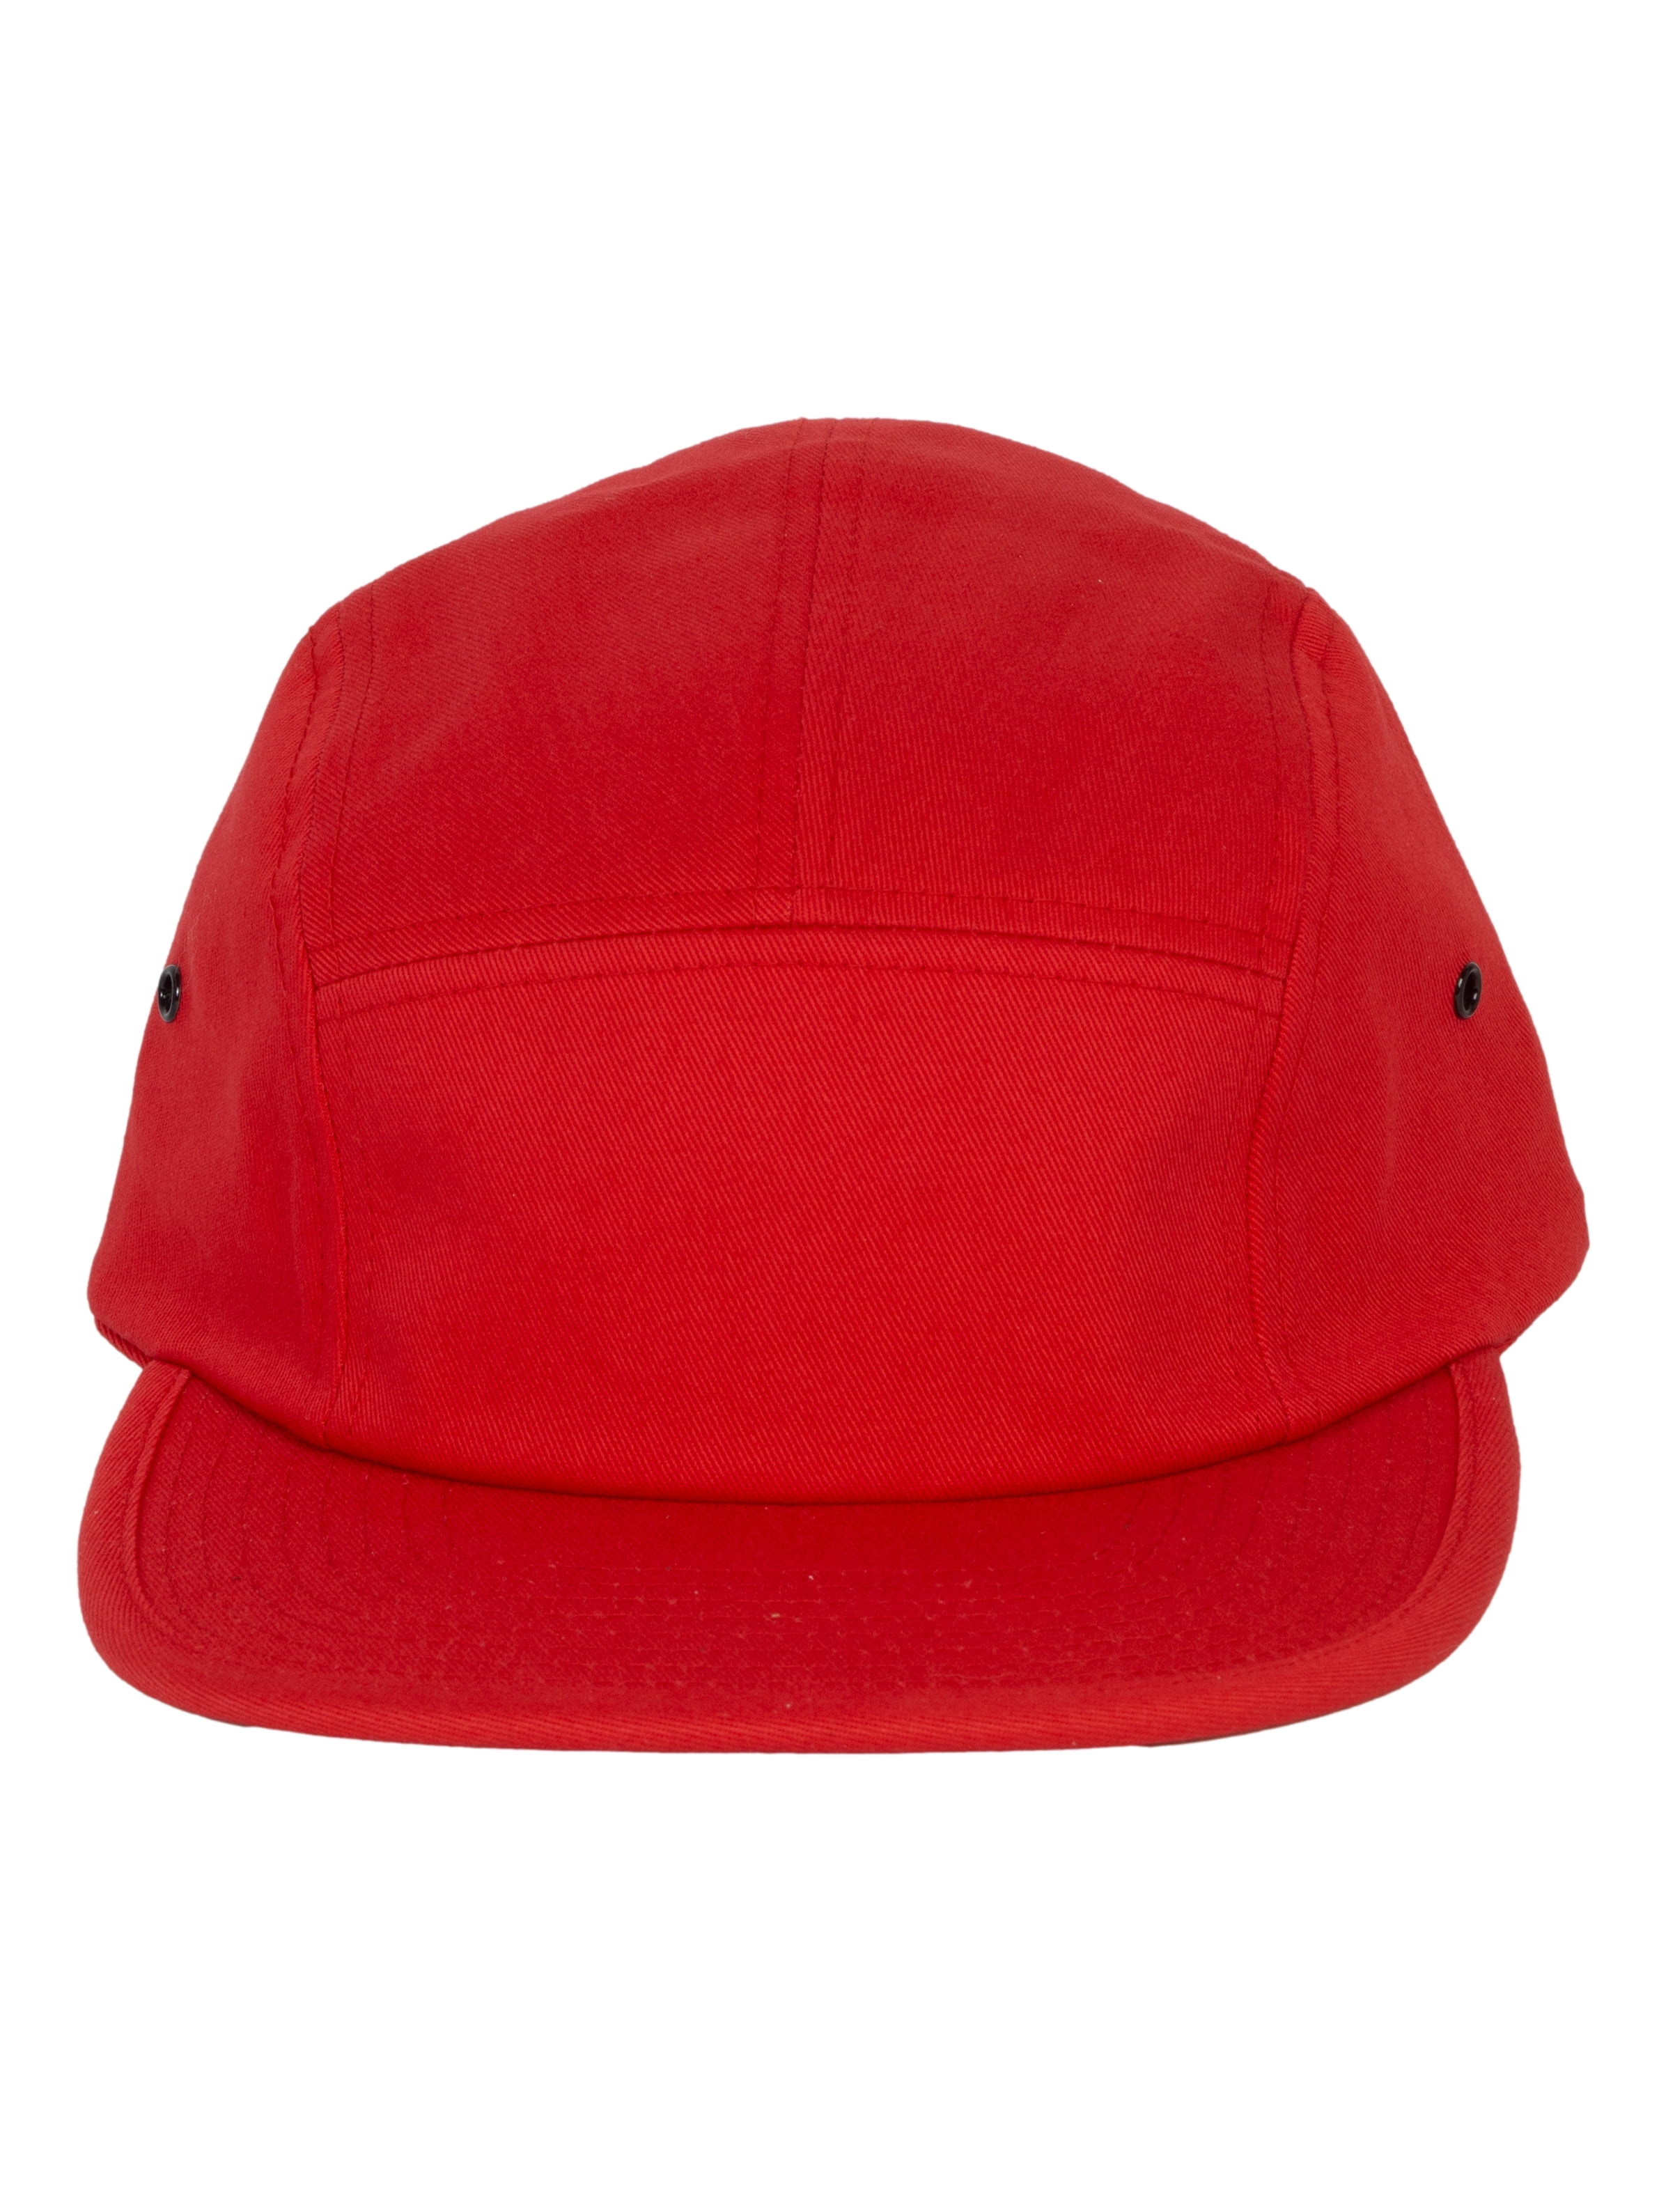 Flat Jockey Hat Men 5 Top Headwear Cap Baseball Black For Panel Bill Classic